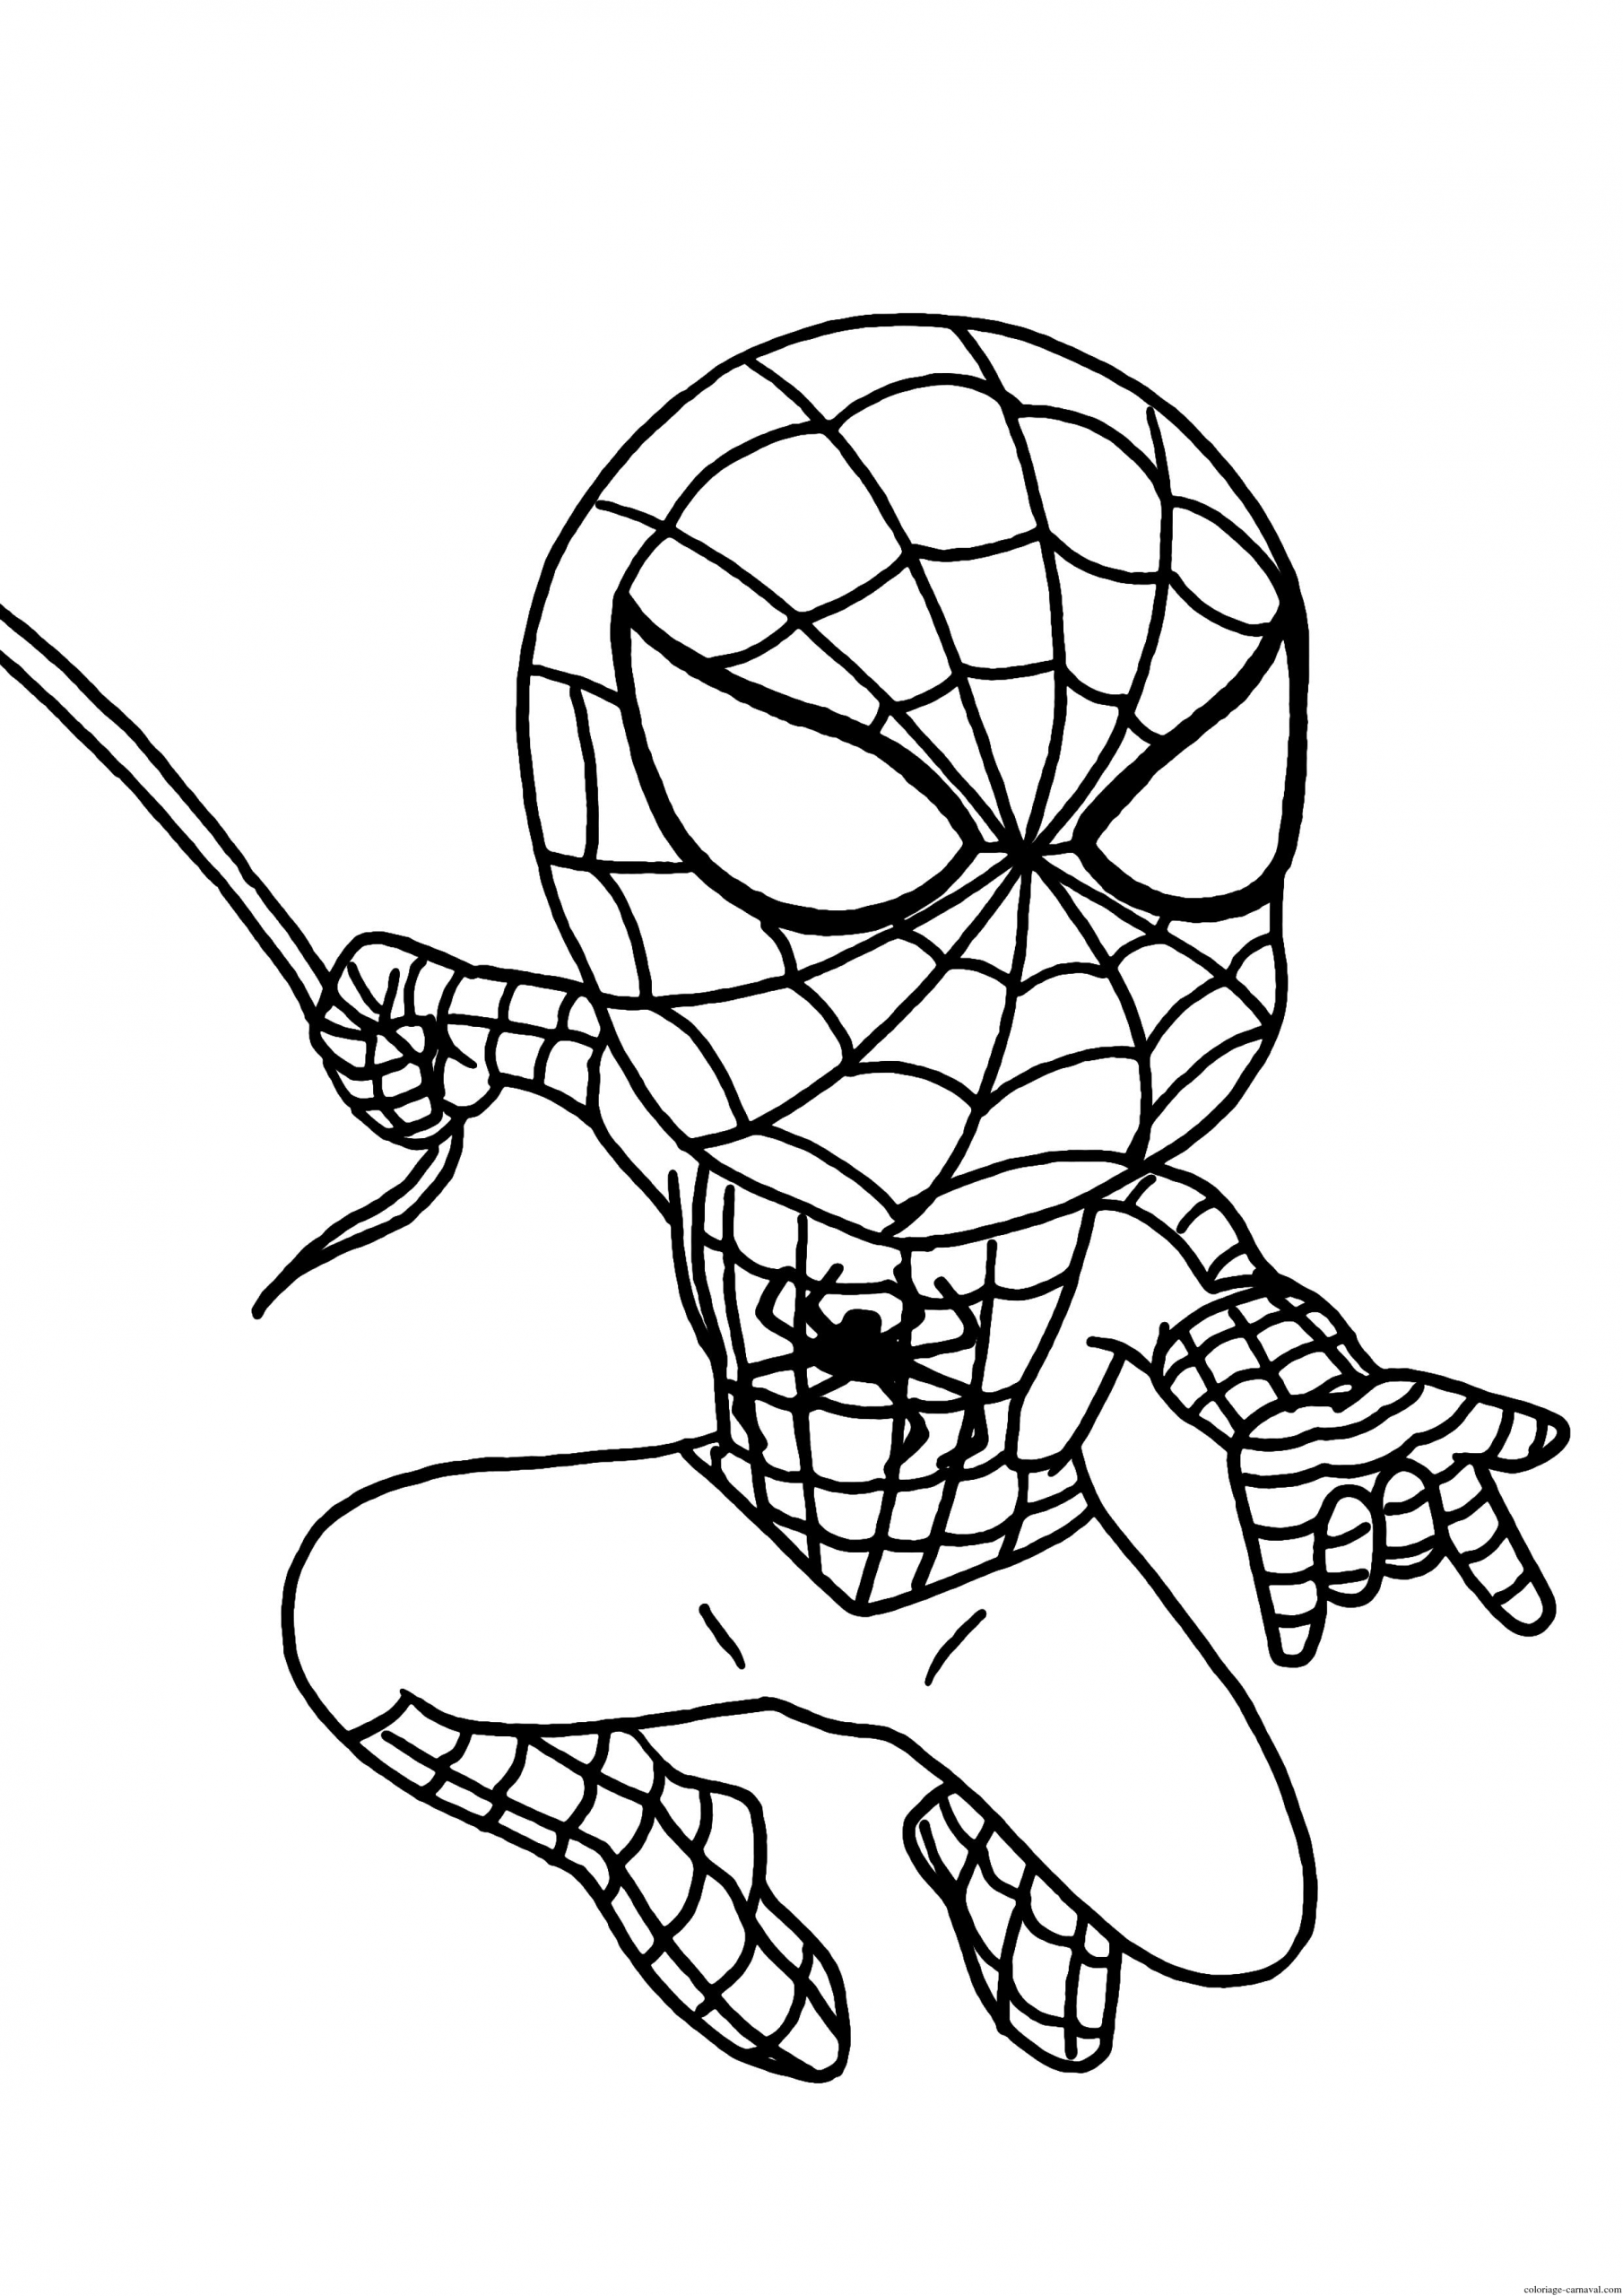 Coloriage Mini Spider Man 2017 Figurine Dessin Gratuit tout Coloriage Spidermann 